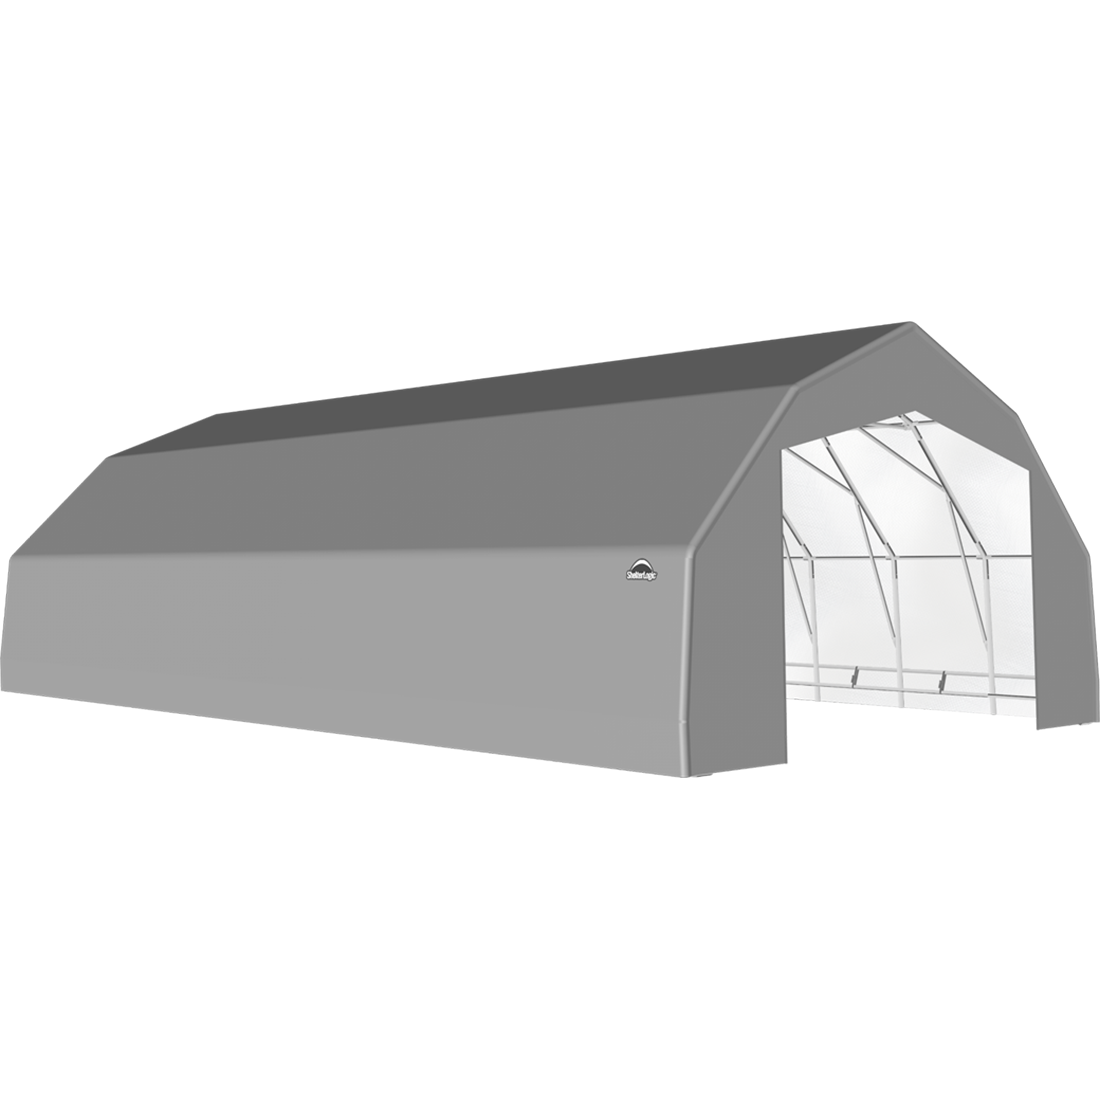 ShelterTech SP Series Barn Shelter, 25 ft. x 44 ft. x 14 ft. Heavy Duty PVC 14.5 oz. Gray